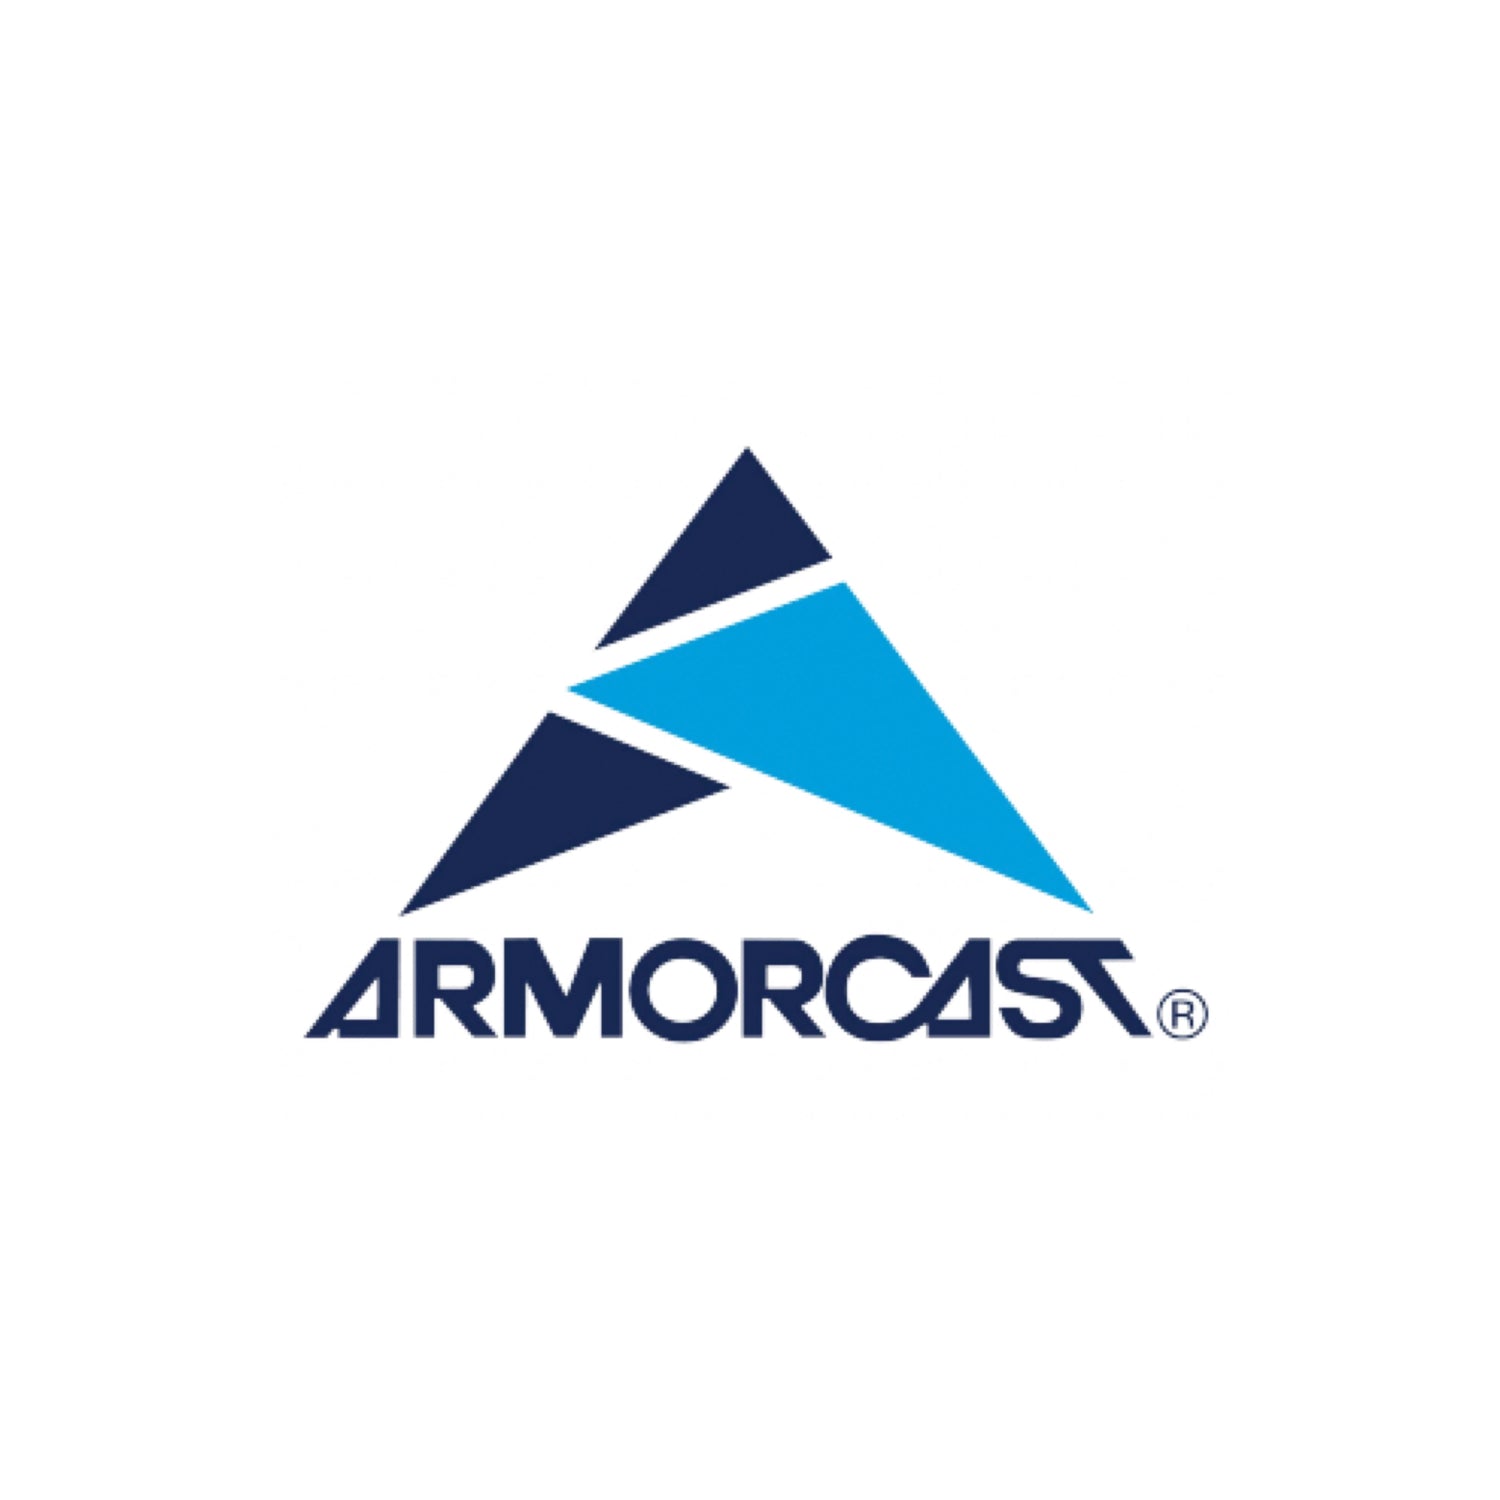 ARMORCAST PRODUCTS COMPANY